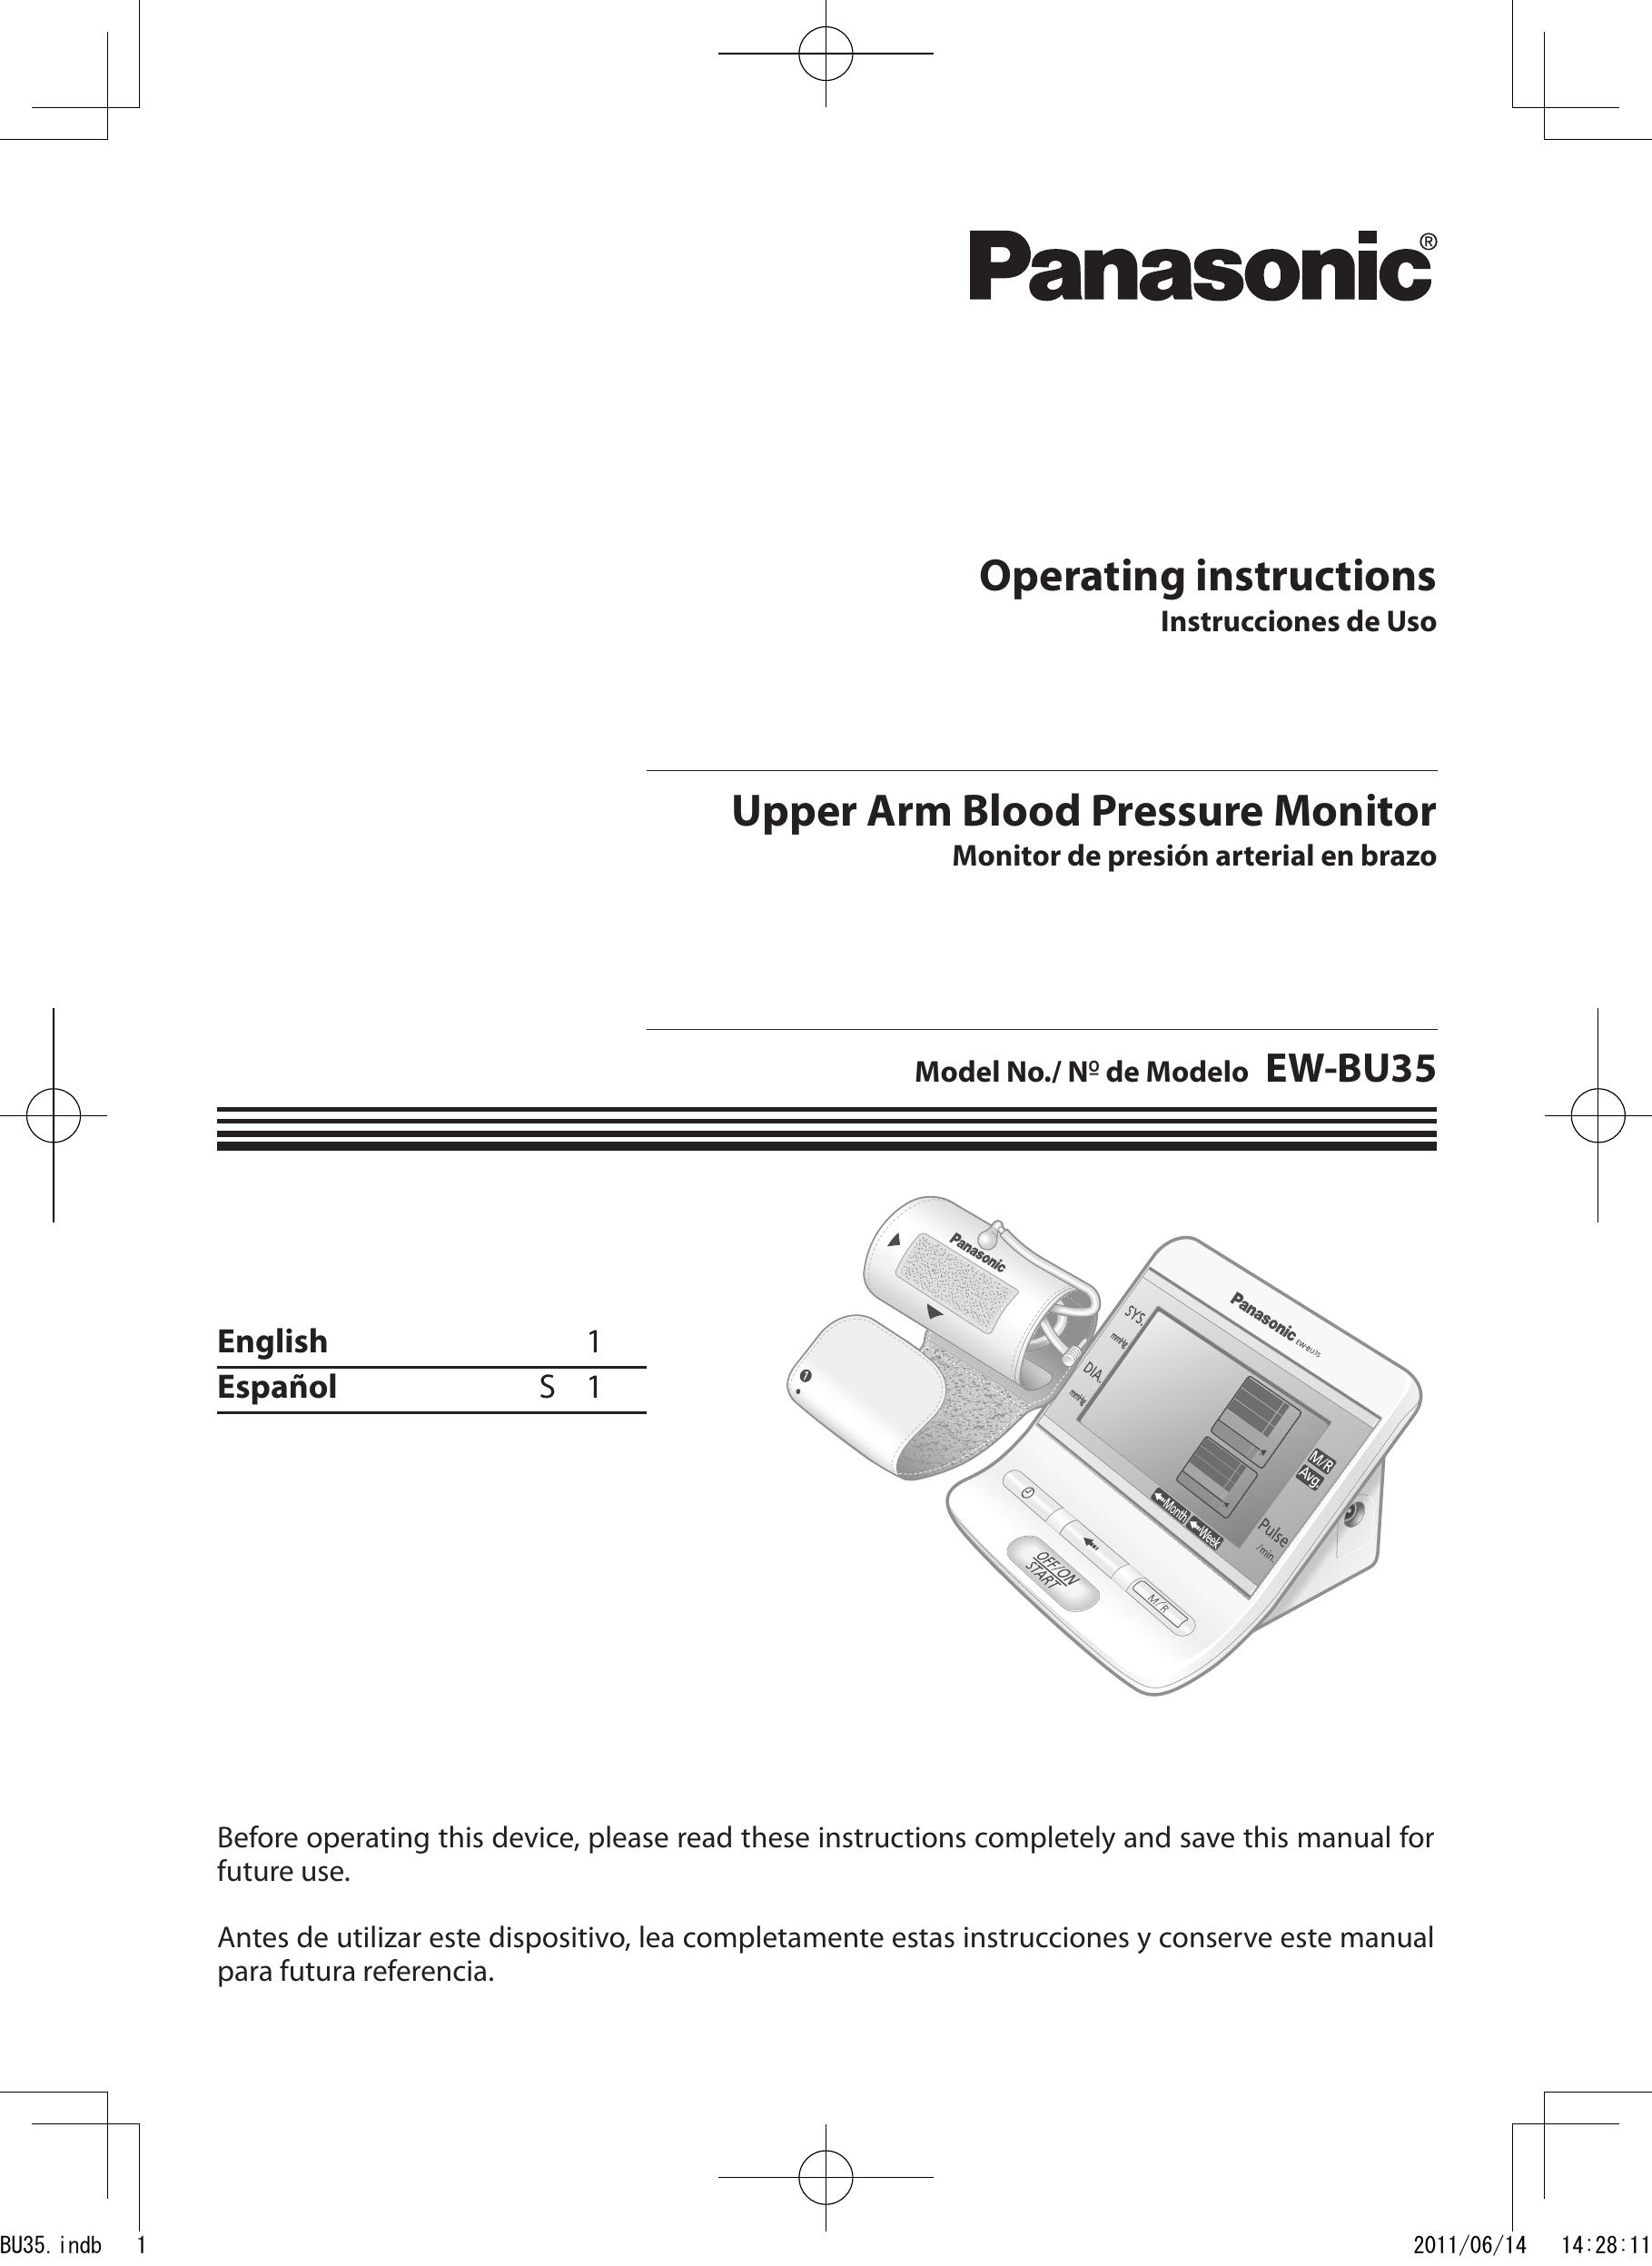 Panasonic EW-BU35 Blood Pressure Monitor User Manual